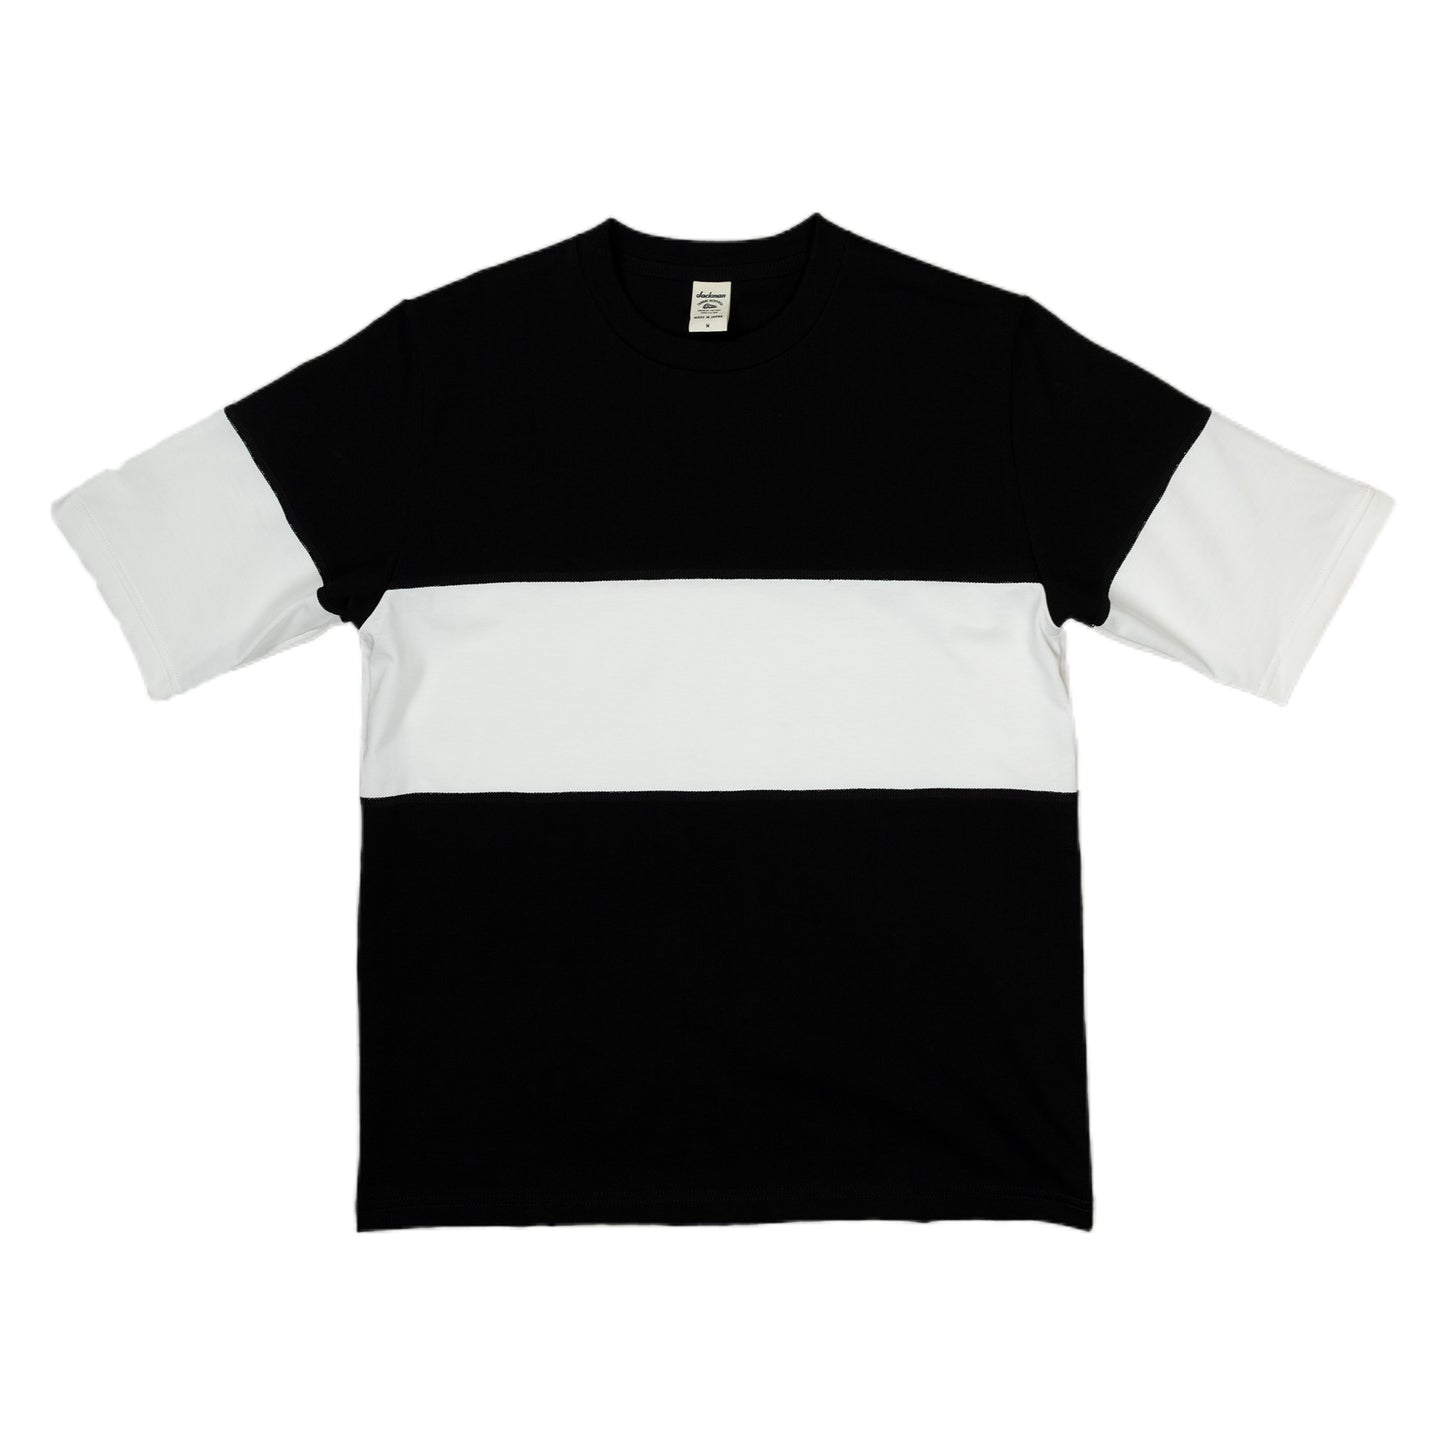 Jackman Border T-Shirt Single Stripe in Black and White